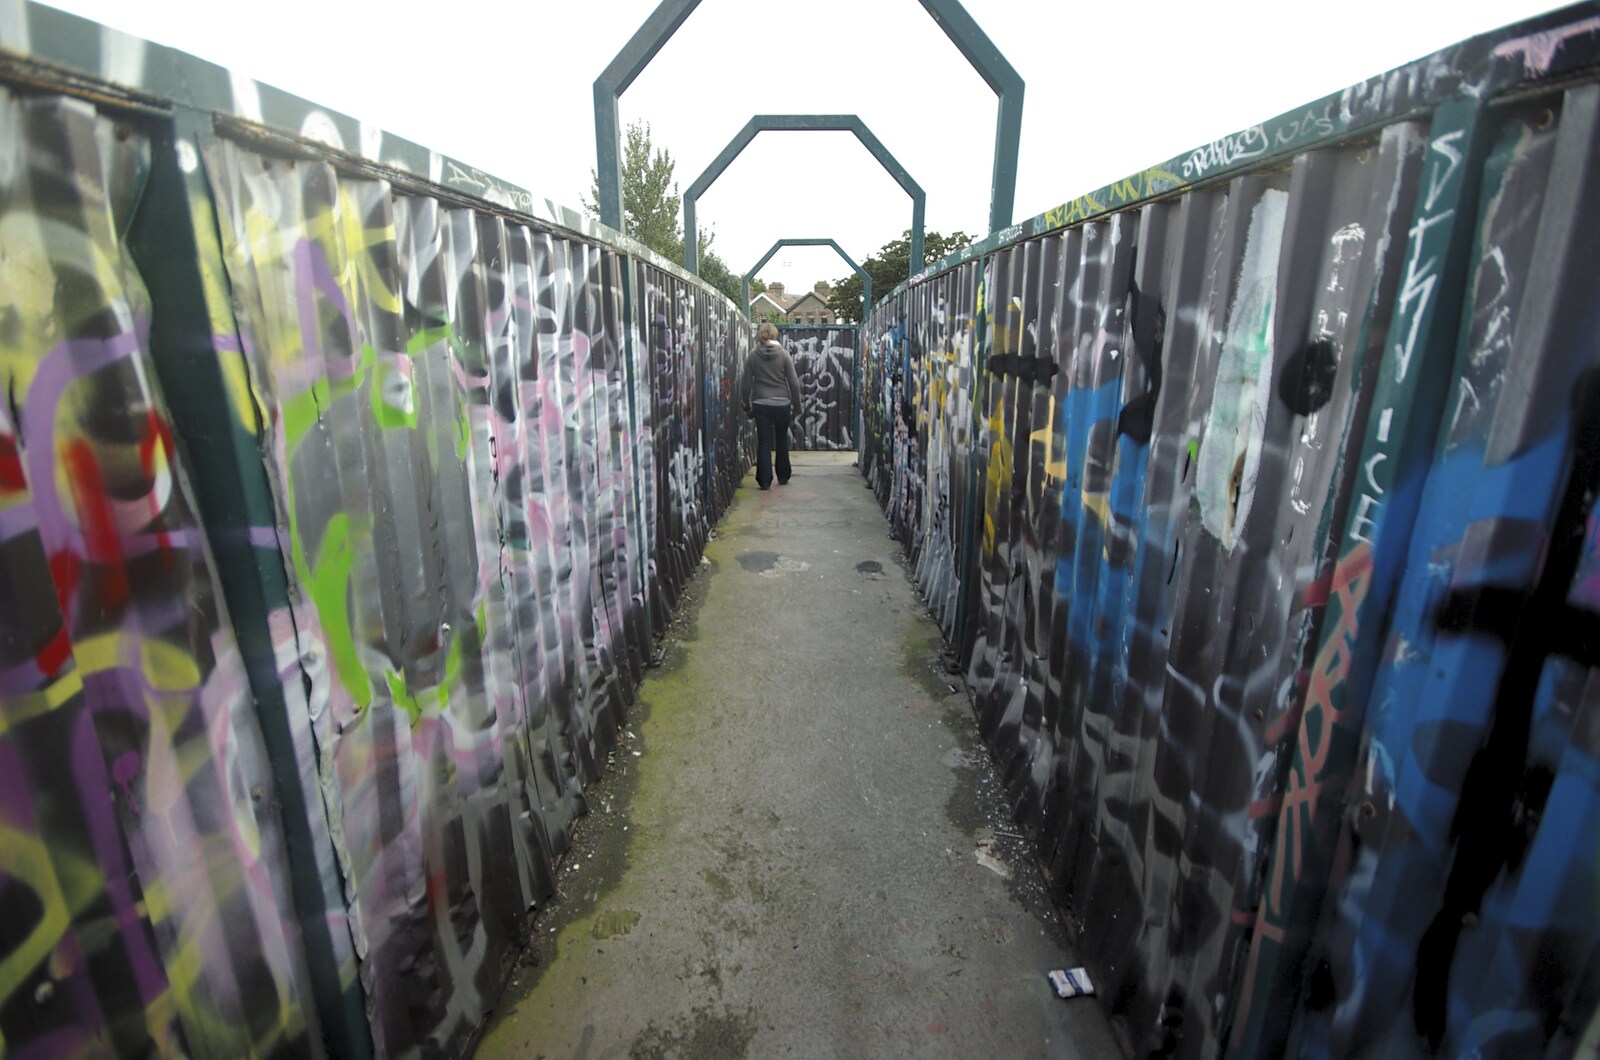 Blackrock and Dublin, Ireland - 24th September 2007: The oft-photographed 'graffiti bridge' over the DART railway